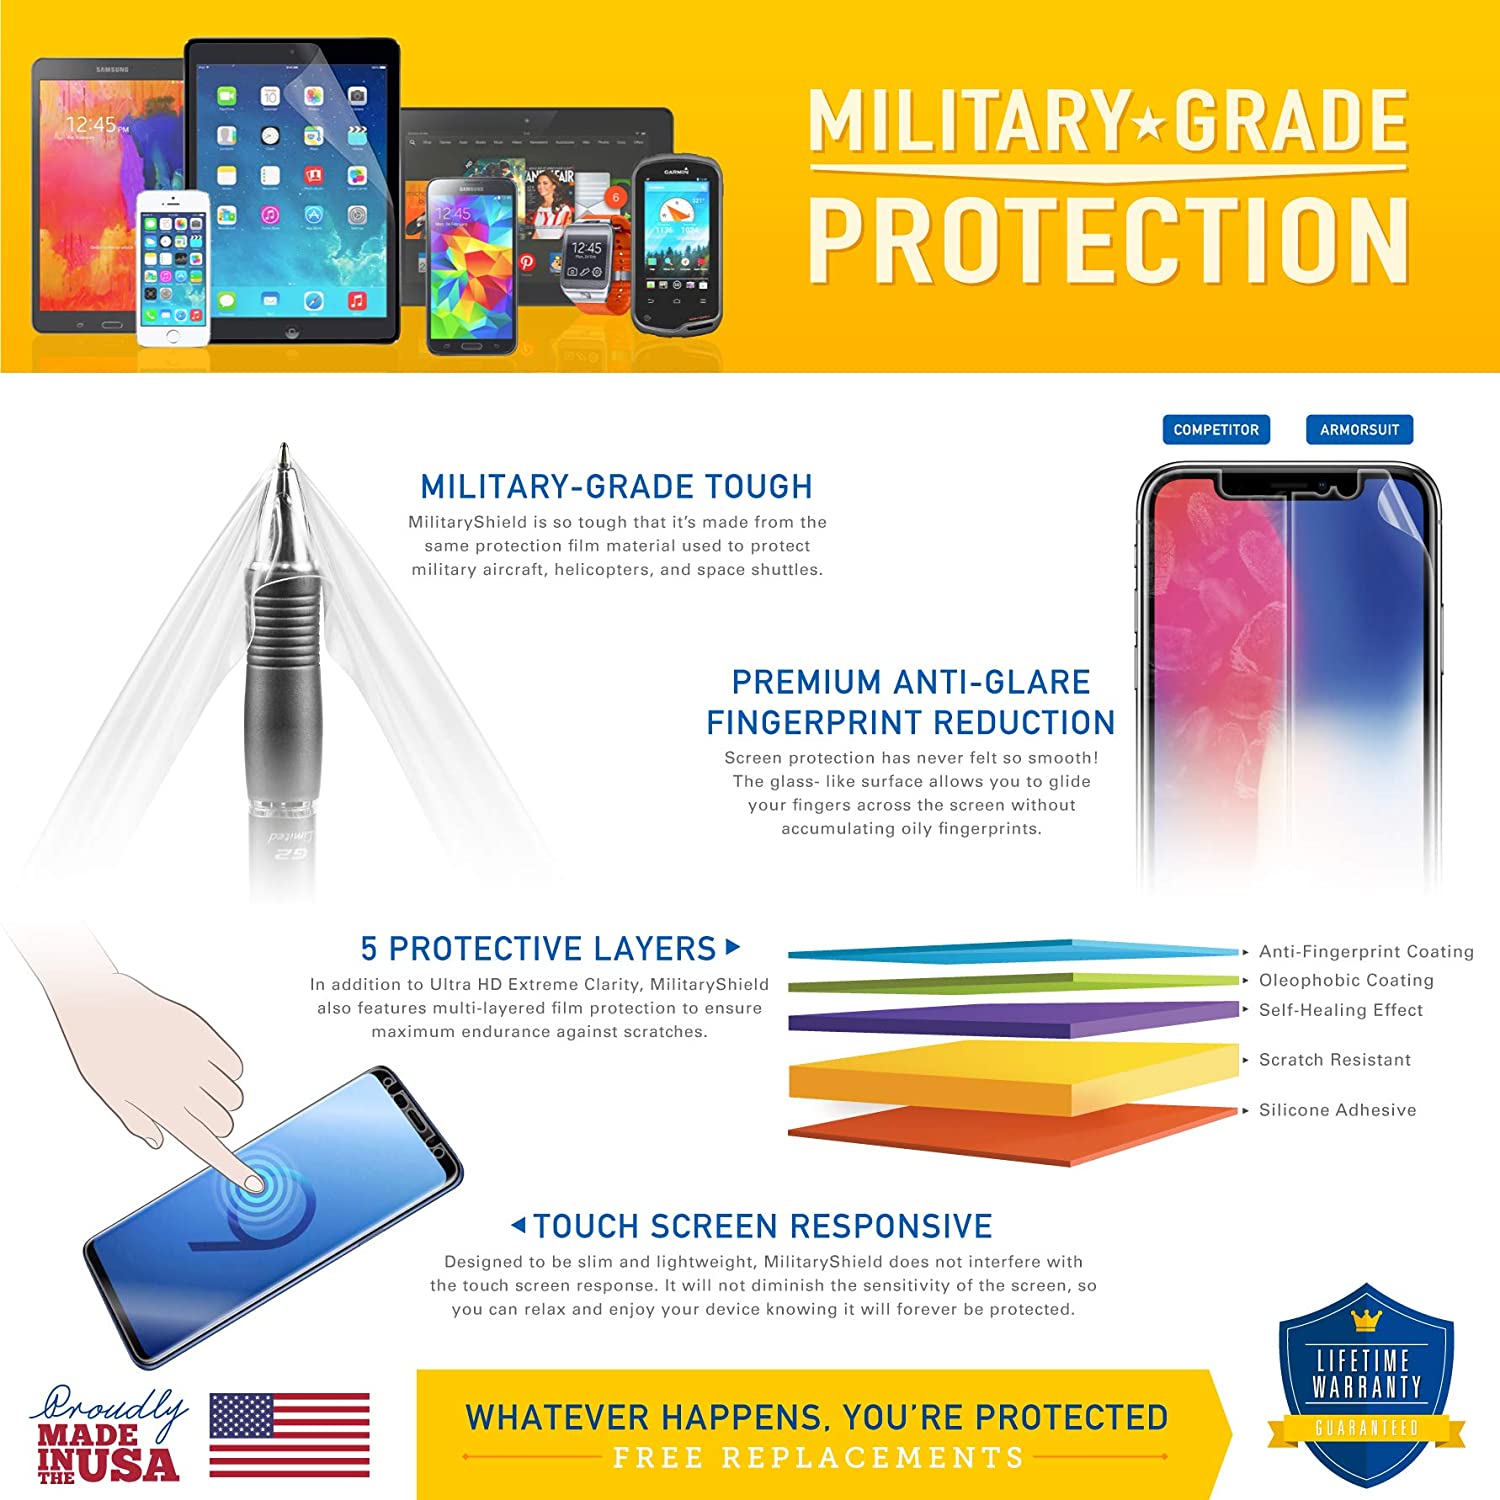 [2 Pack] Motorola Moto G4 Play Screen Protector